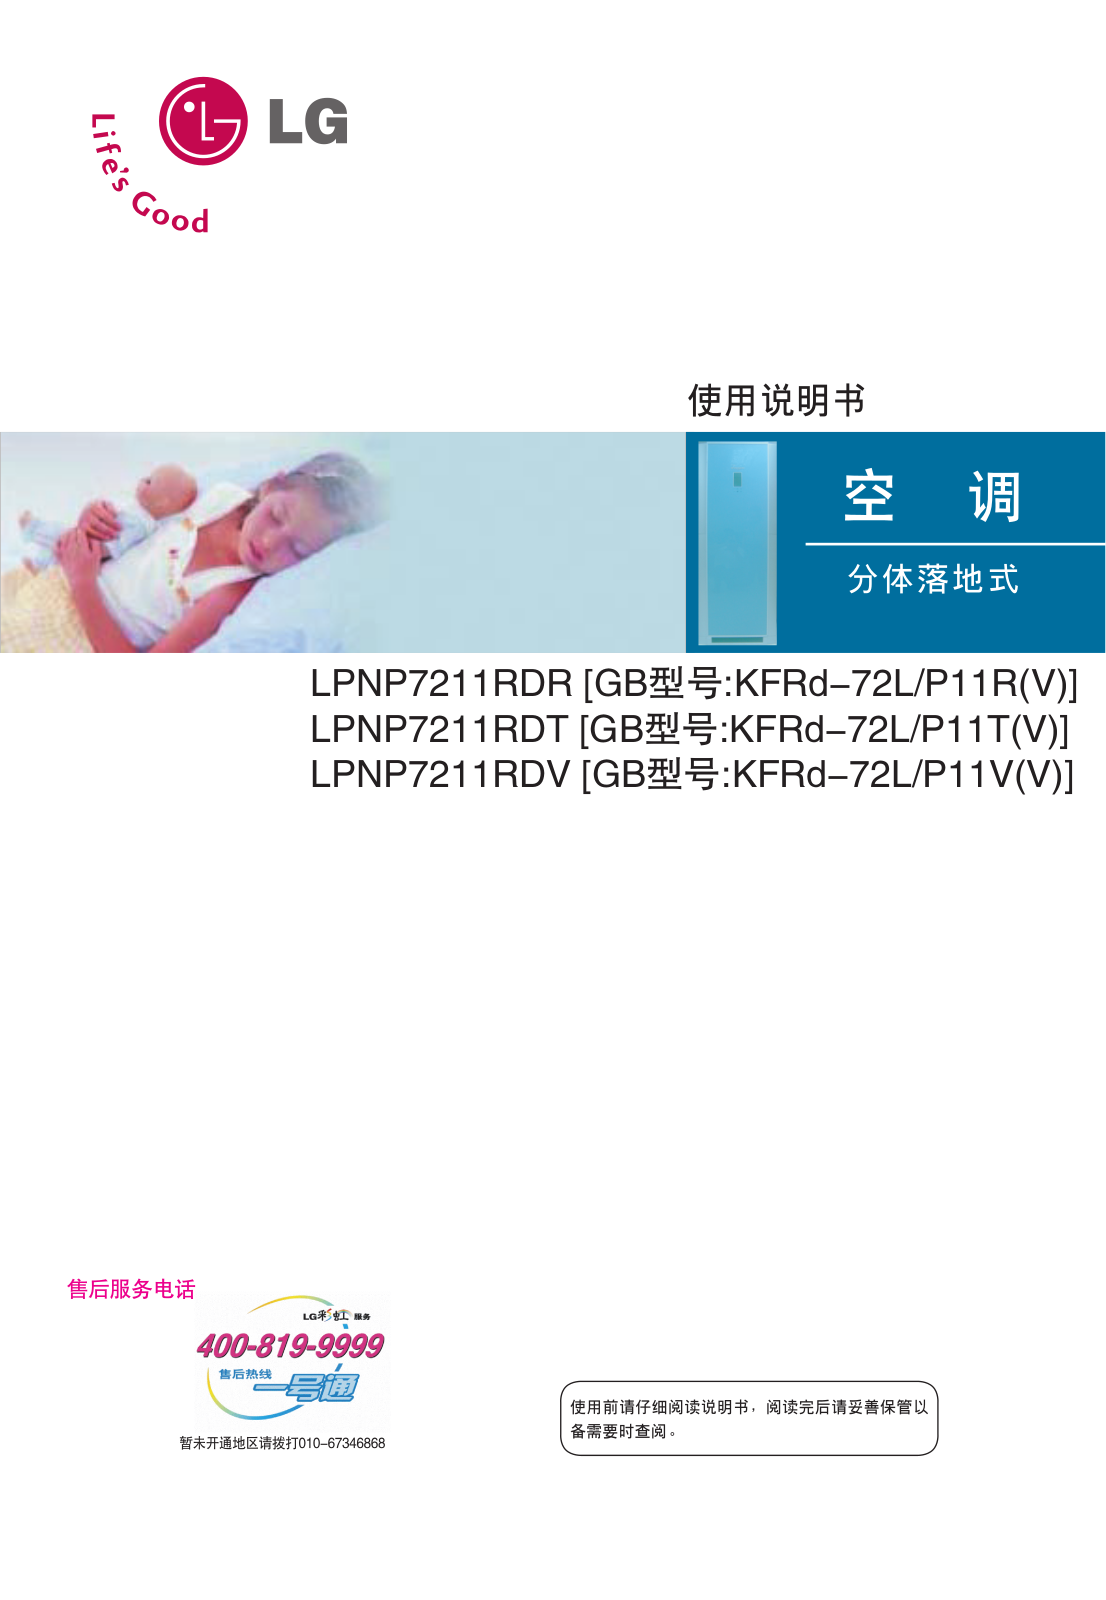 Lg LPNP7211RDV, LPNP7211RDR, LPUM78R User Manual